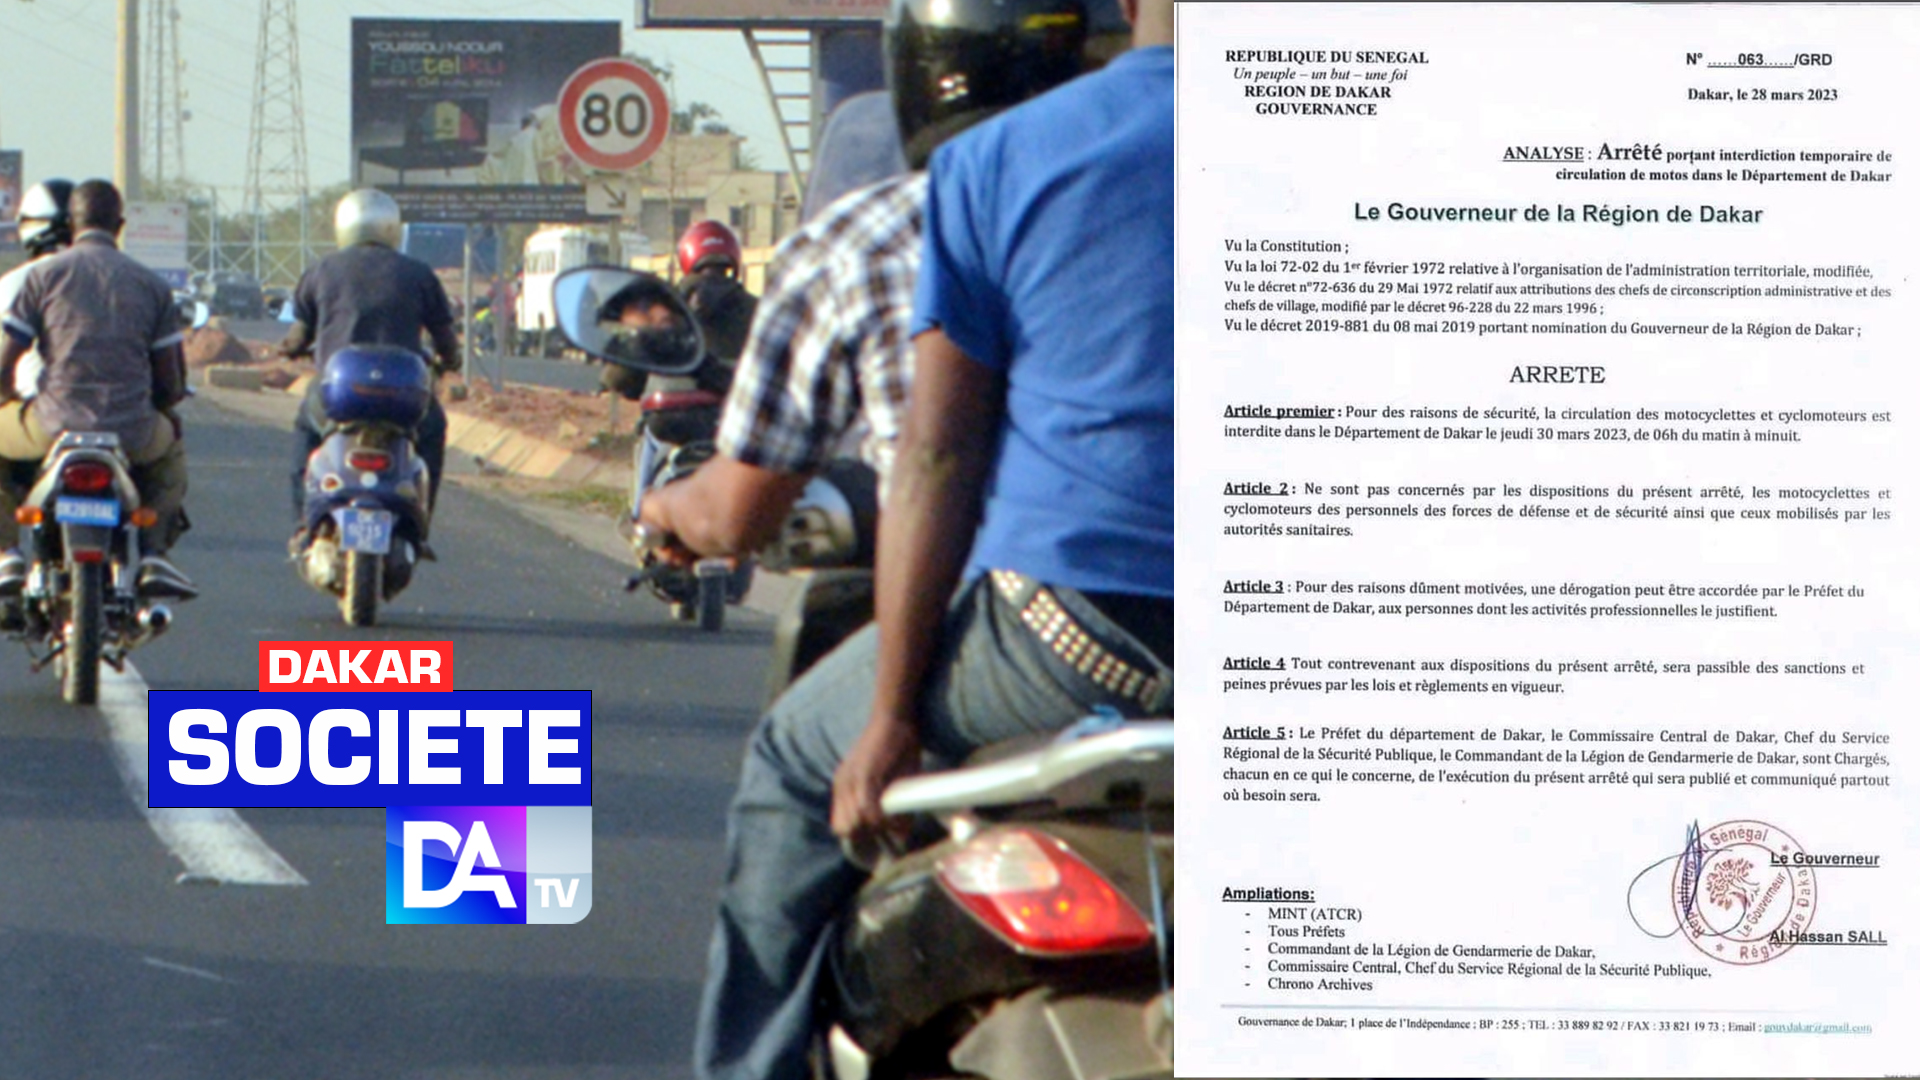 Dakar : Les motocyclettes et cyclomoteurs interdits de circulation ce jeudi (DOCUMENT)